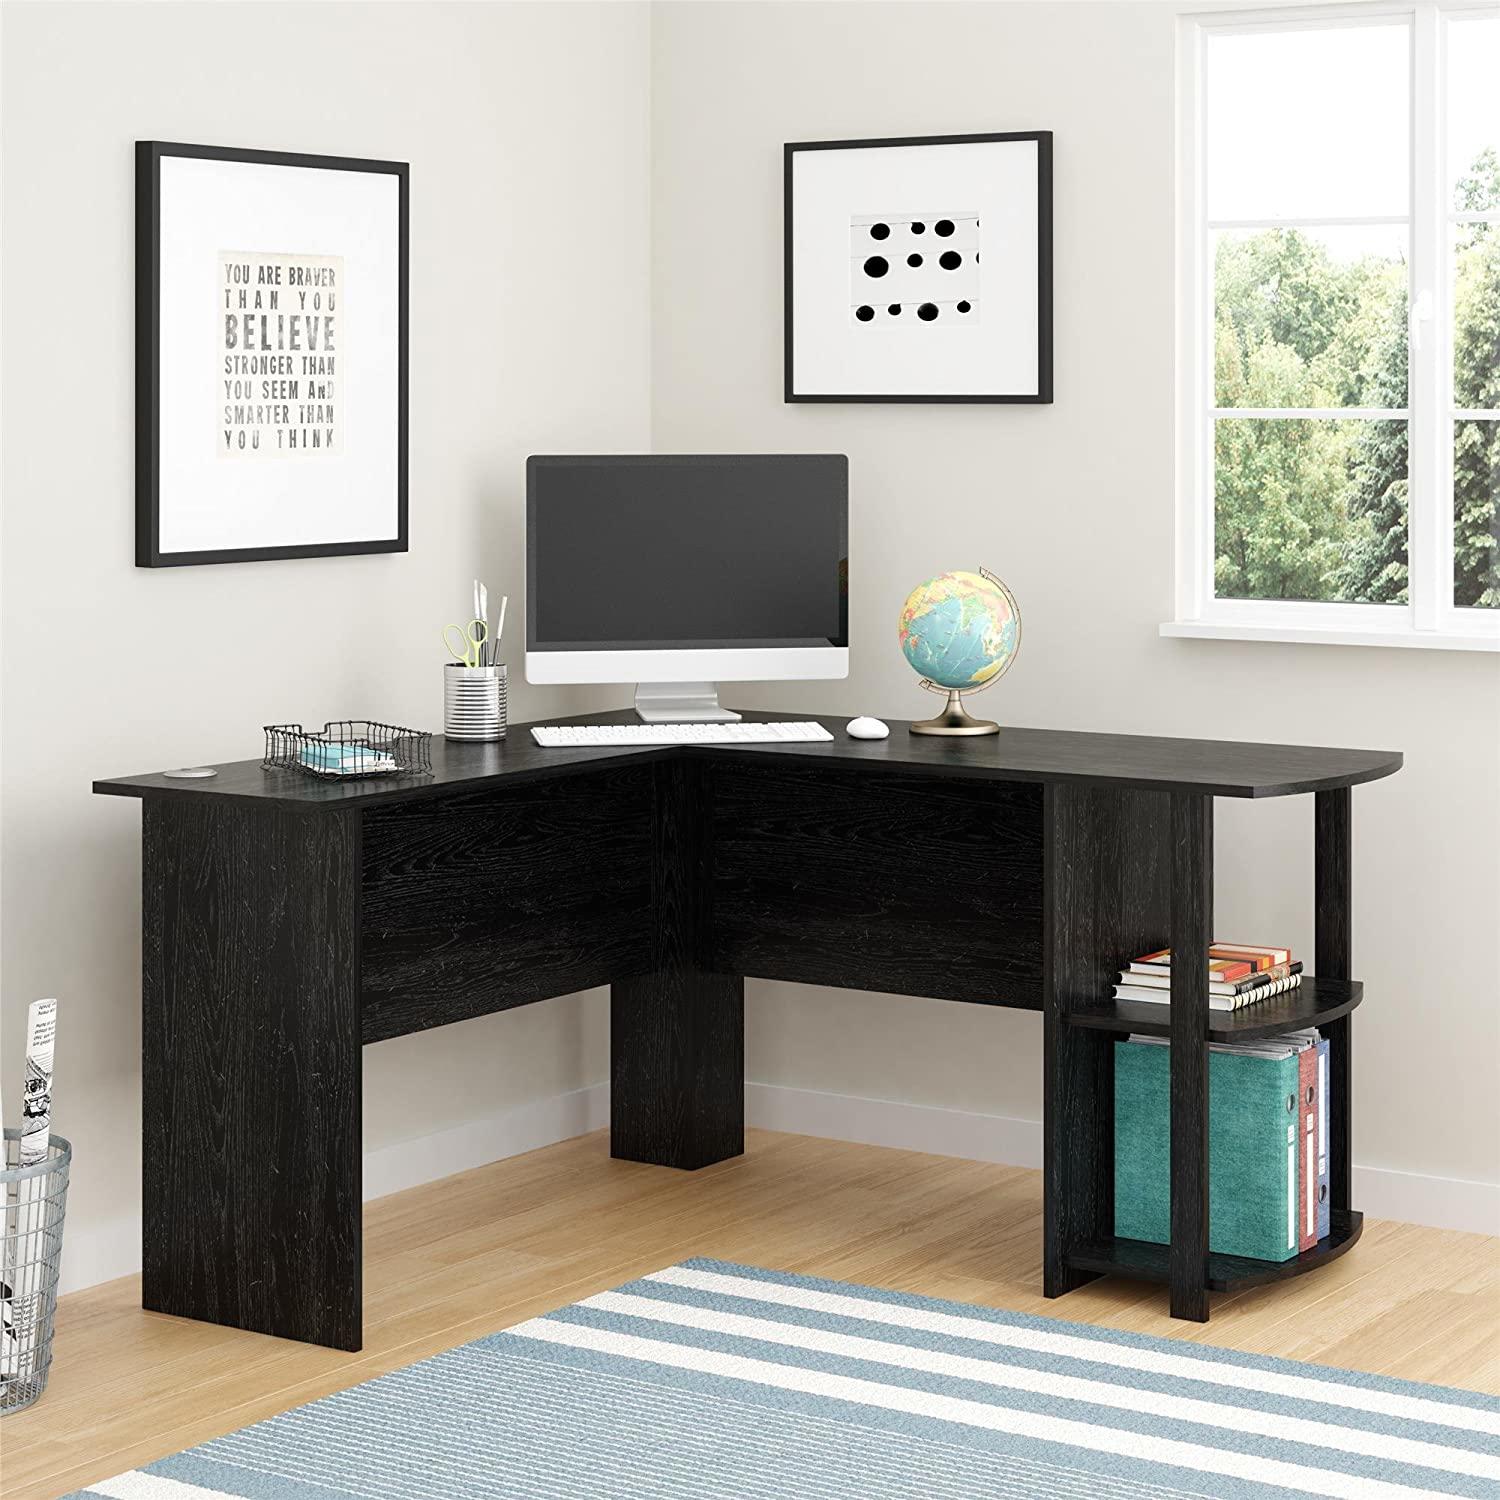 L-shaped desk with shelves: $105 